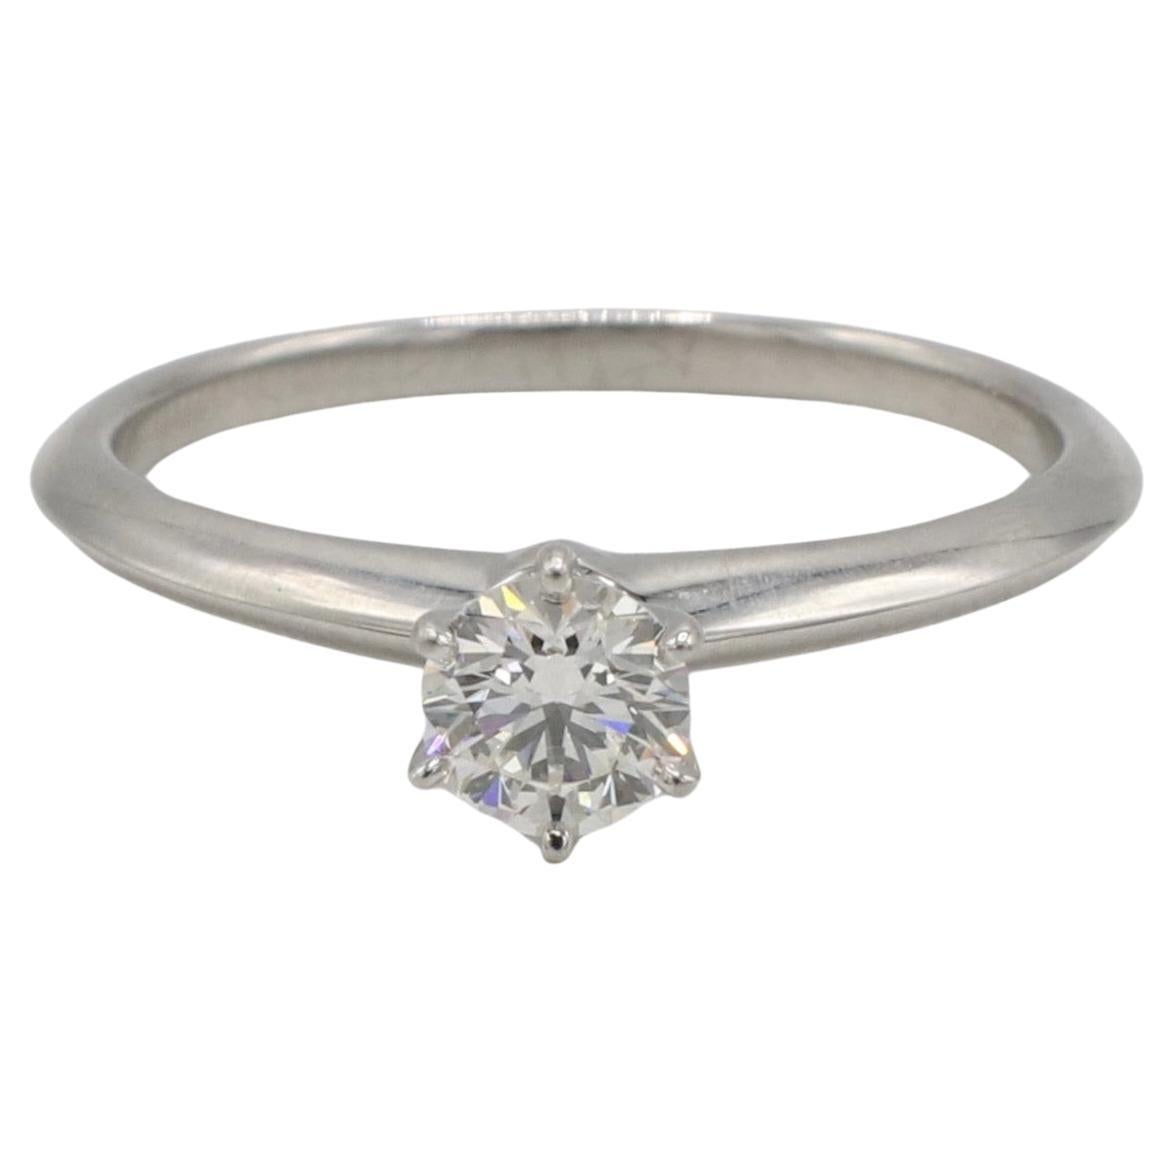 Tiffany & Co. Platinum 0.46 Carat I VS1 Round Natural Diamond Engagement Ring
Metal: Platinum
Weight: 4.03 grams
Diamond: 0.46 carats I VS1 round natural diamond
Size: 8 (US)
Retail: $4,360 (June 9th, 2023)
Signed: ©Tiffany & Co. Pt950 73088593